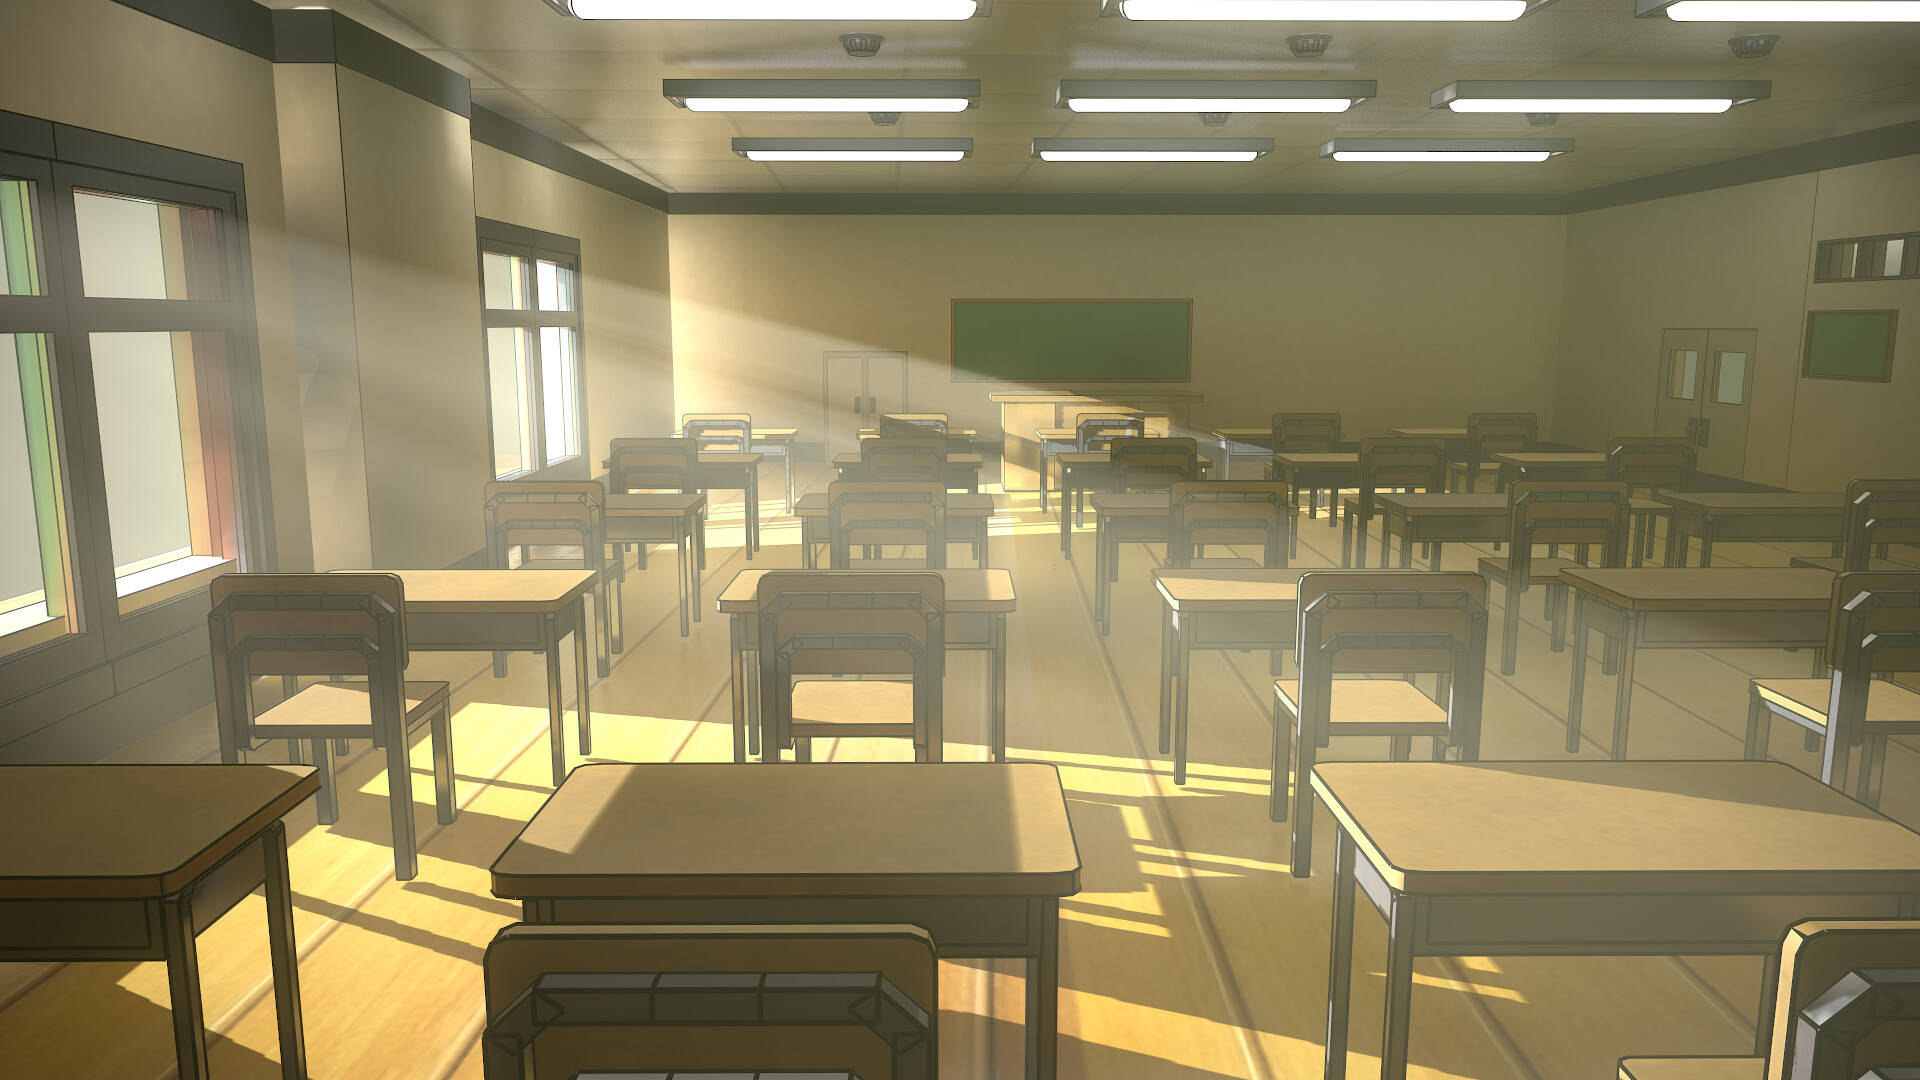 ArtStation - Anime Classroom